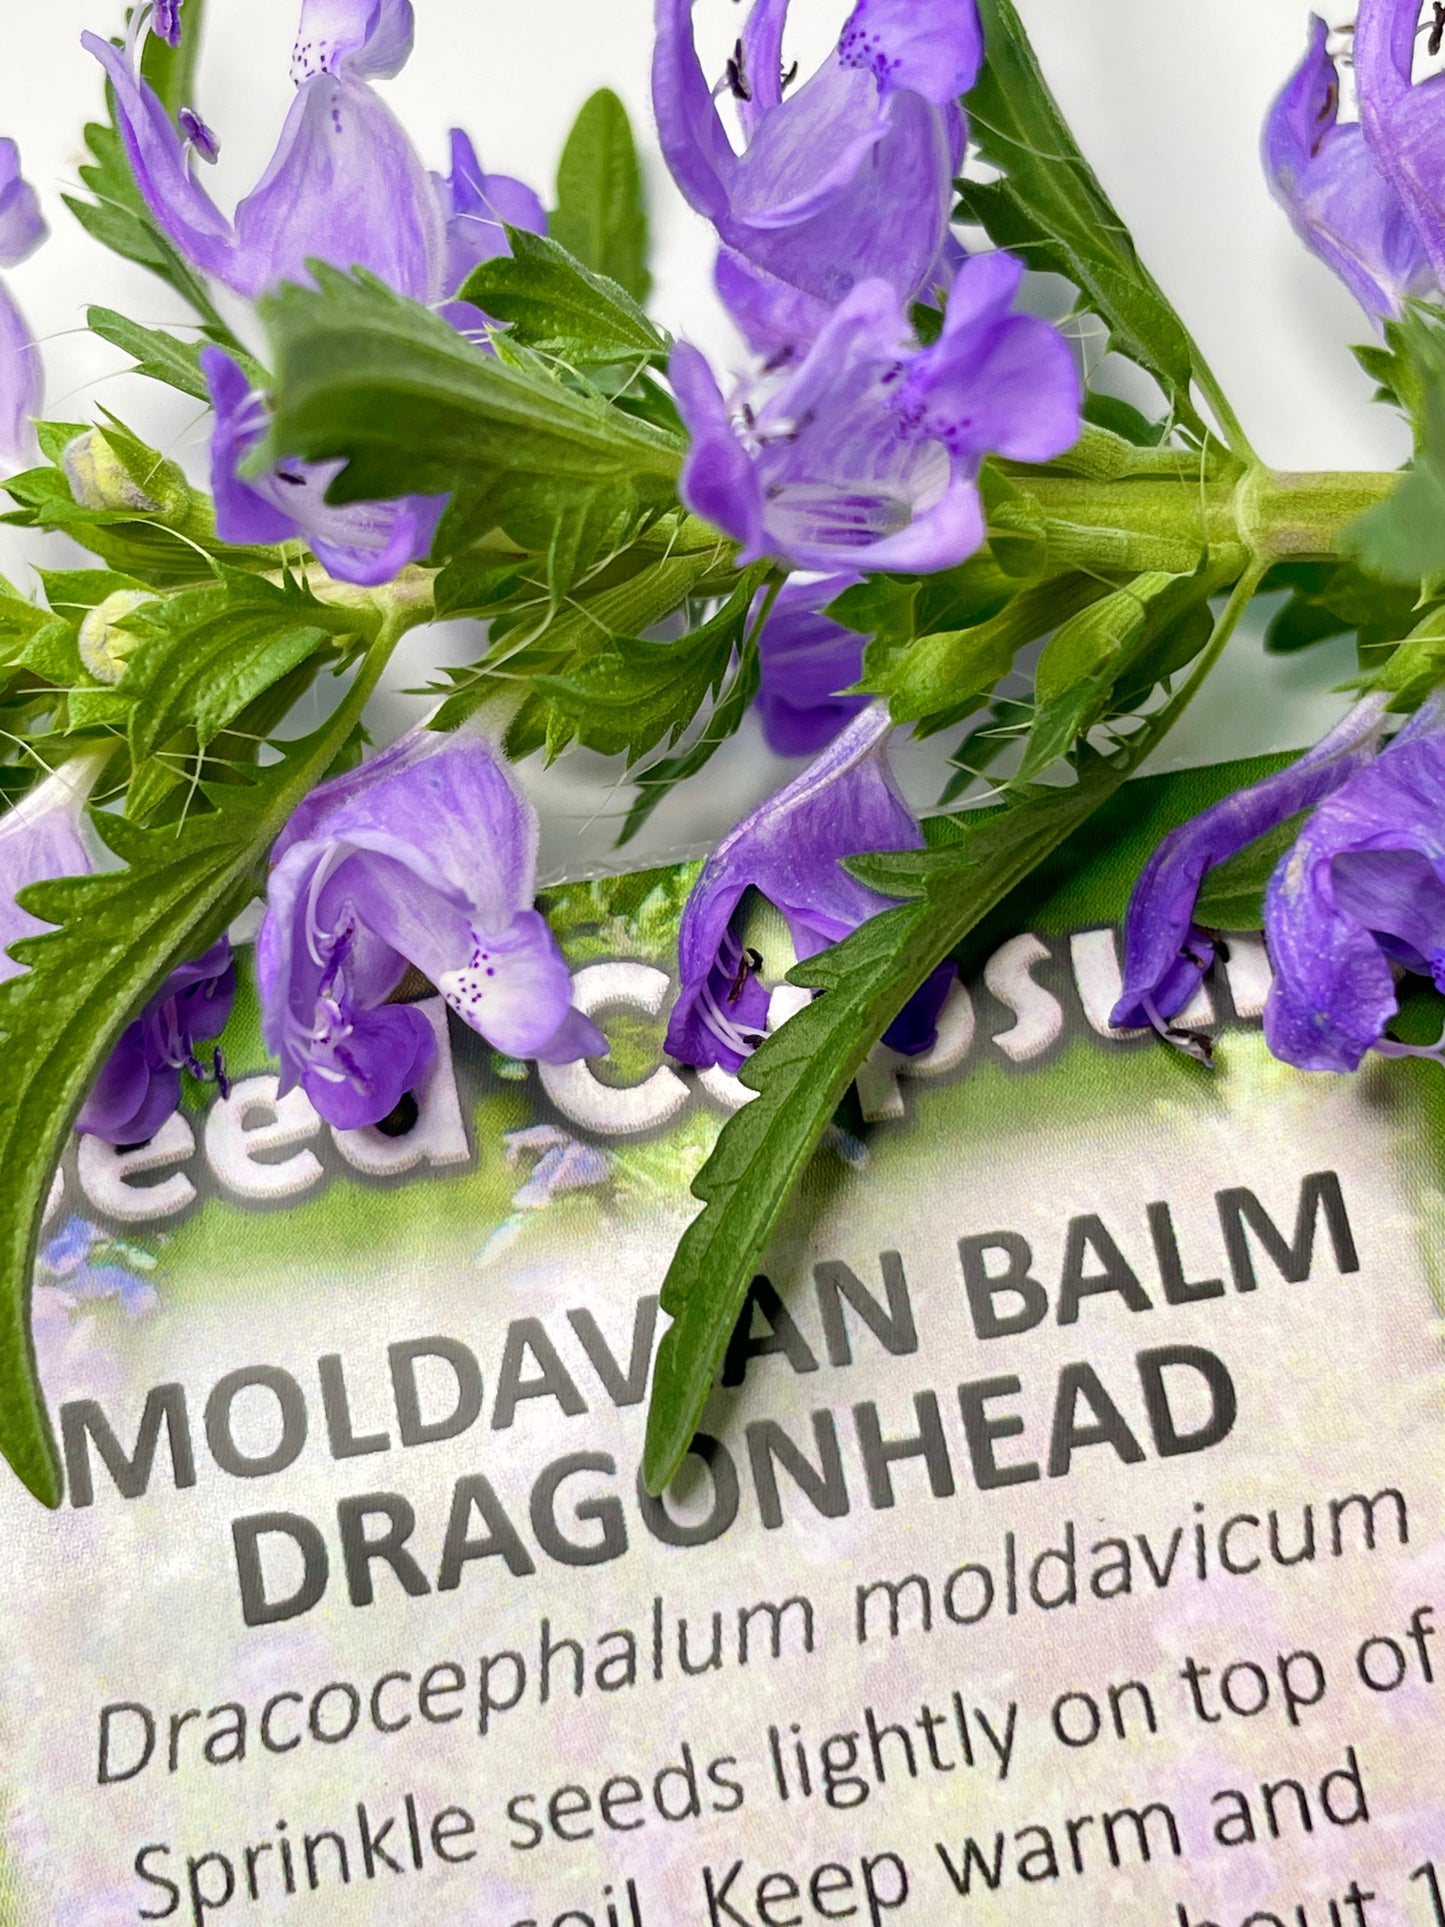 Moldavian Balm Dragonhead Seeds (Dracocephalum moldavica)